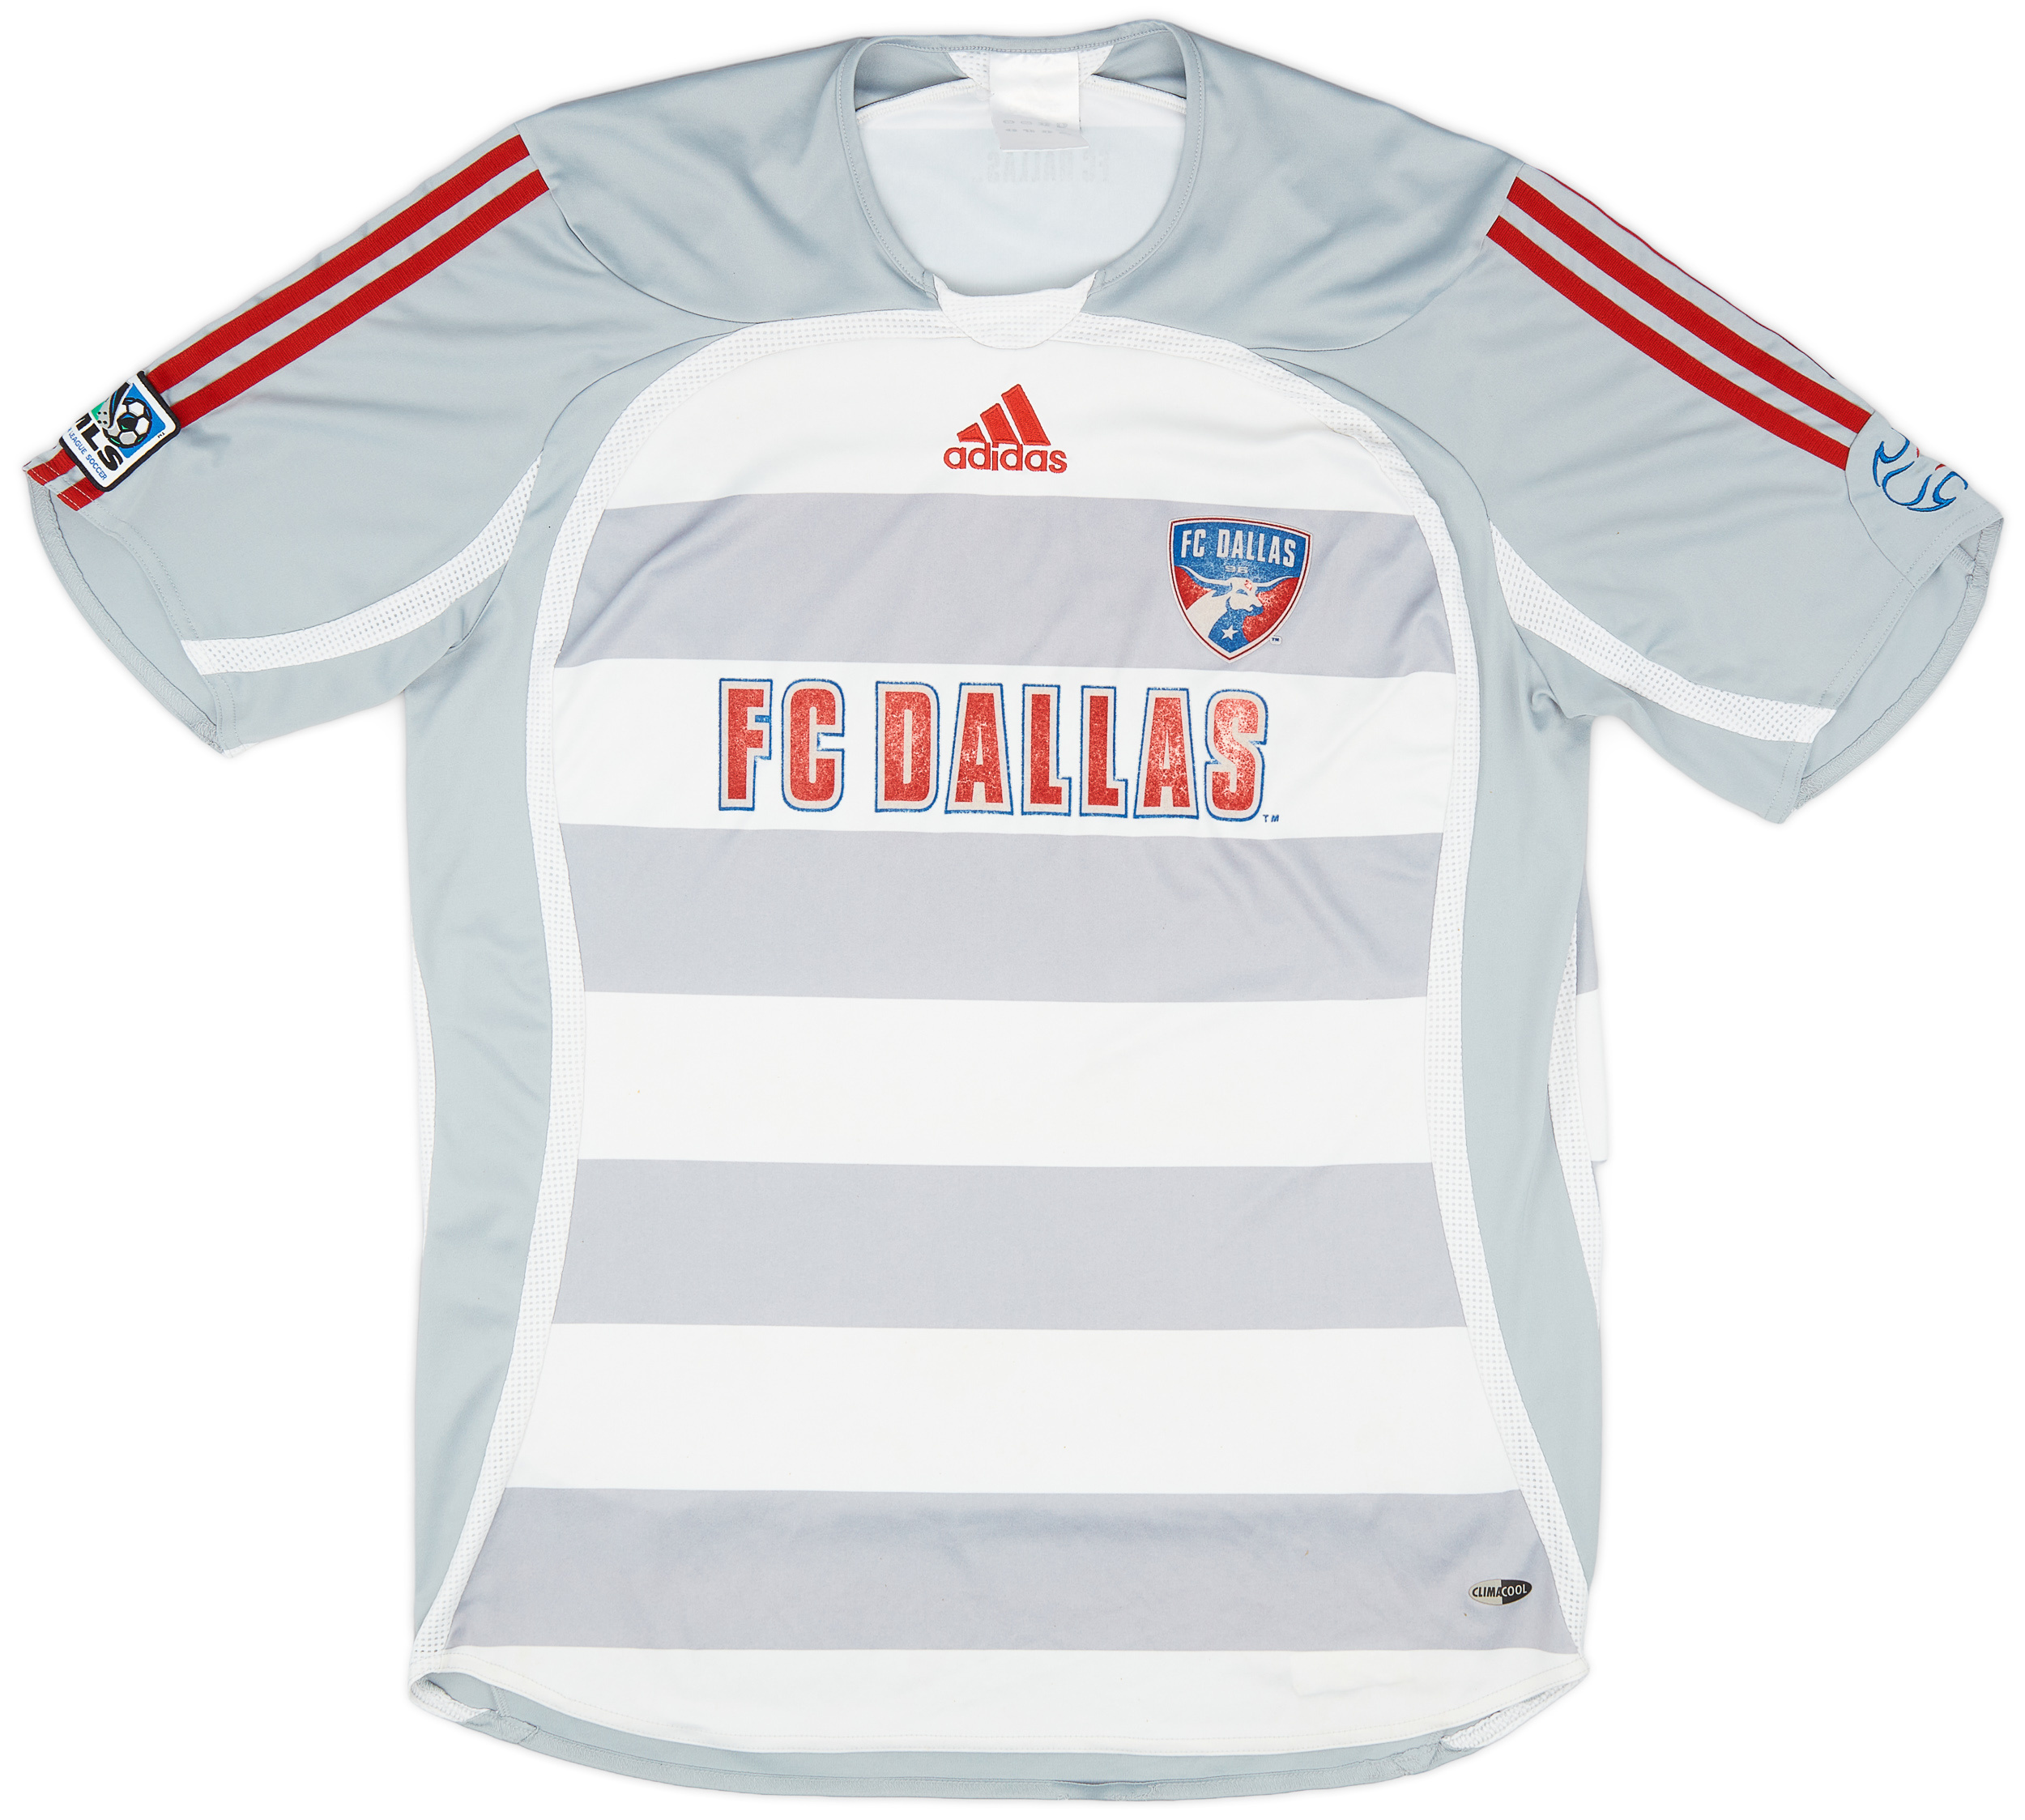 Retro FC Dallas Shirt